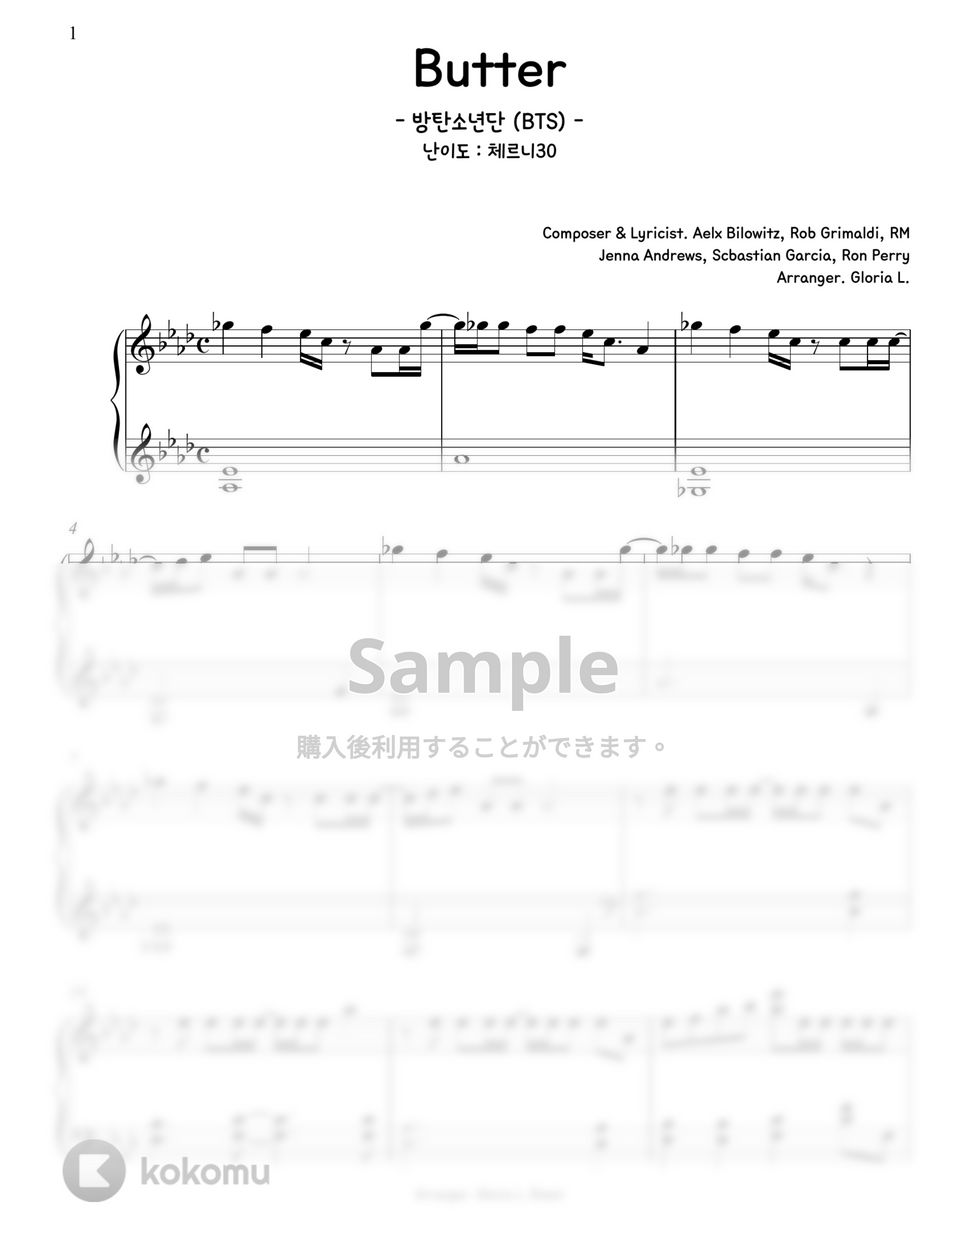 BTS - Butter (難易度:チェルニー30) by Gloria L.